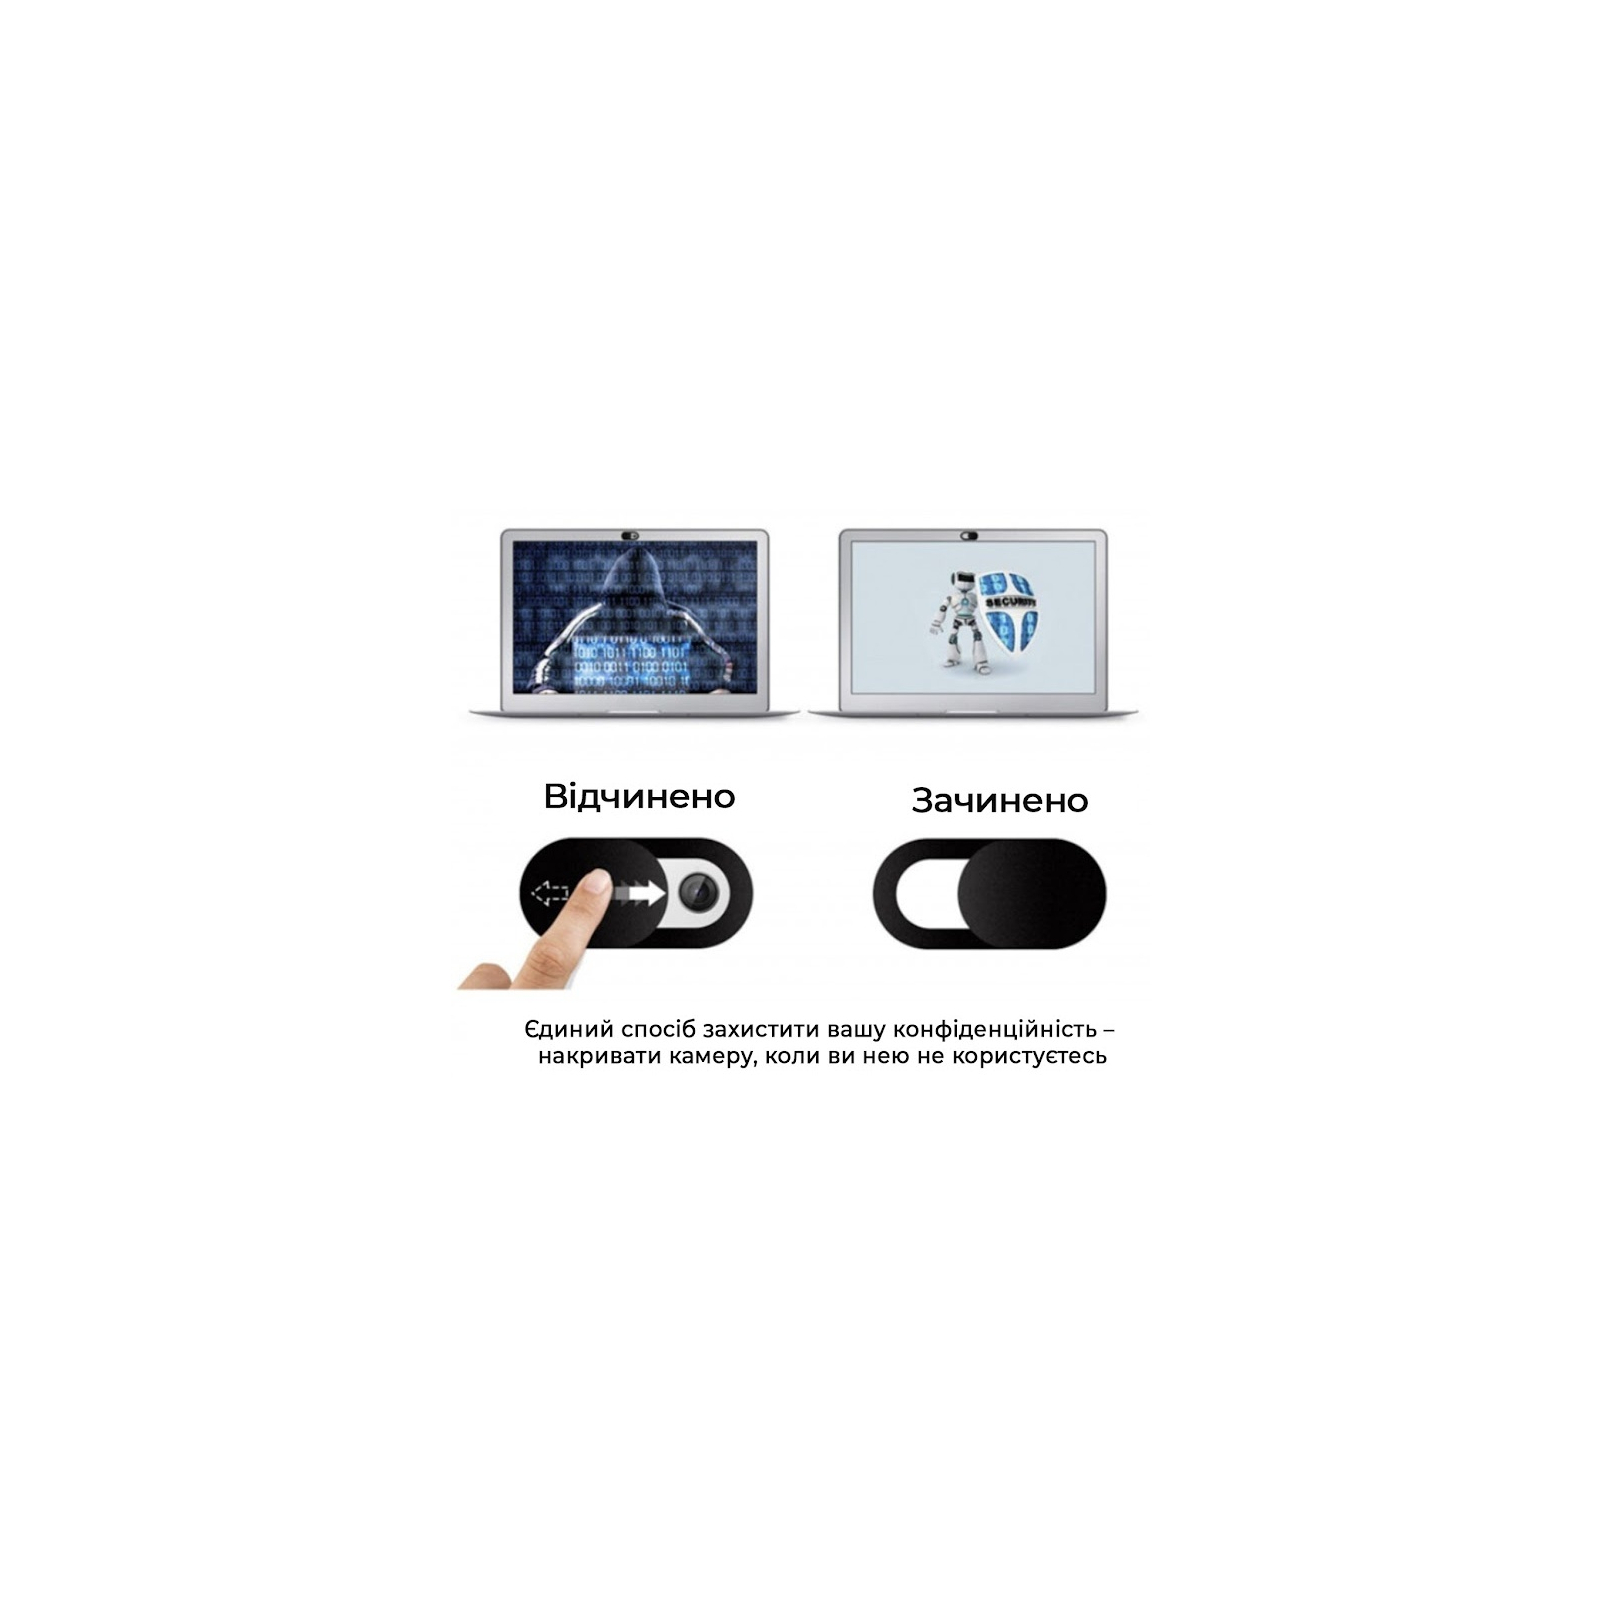 Захисна шторка для веб-камери ноутбука, телефона (наклейка) SampleZone (SZ-001) зображення 2